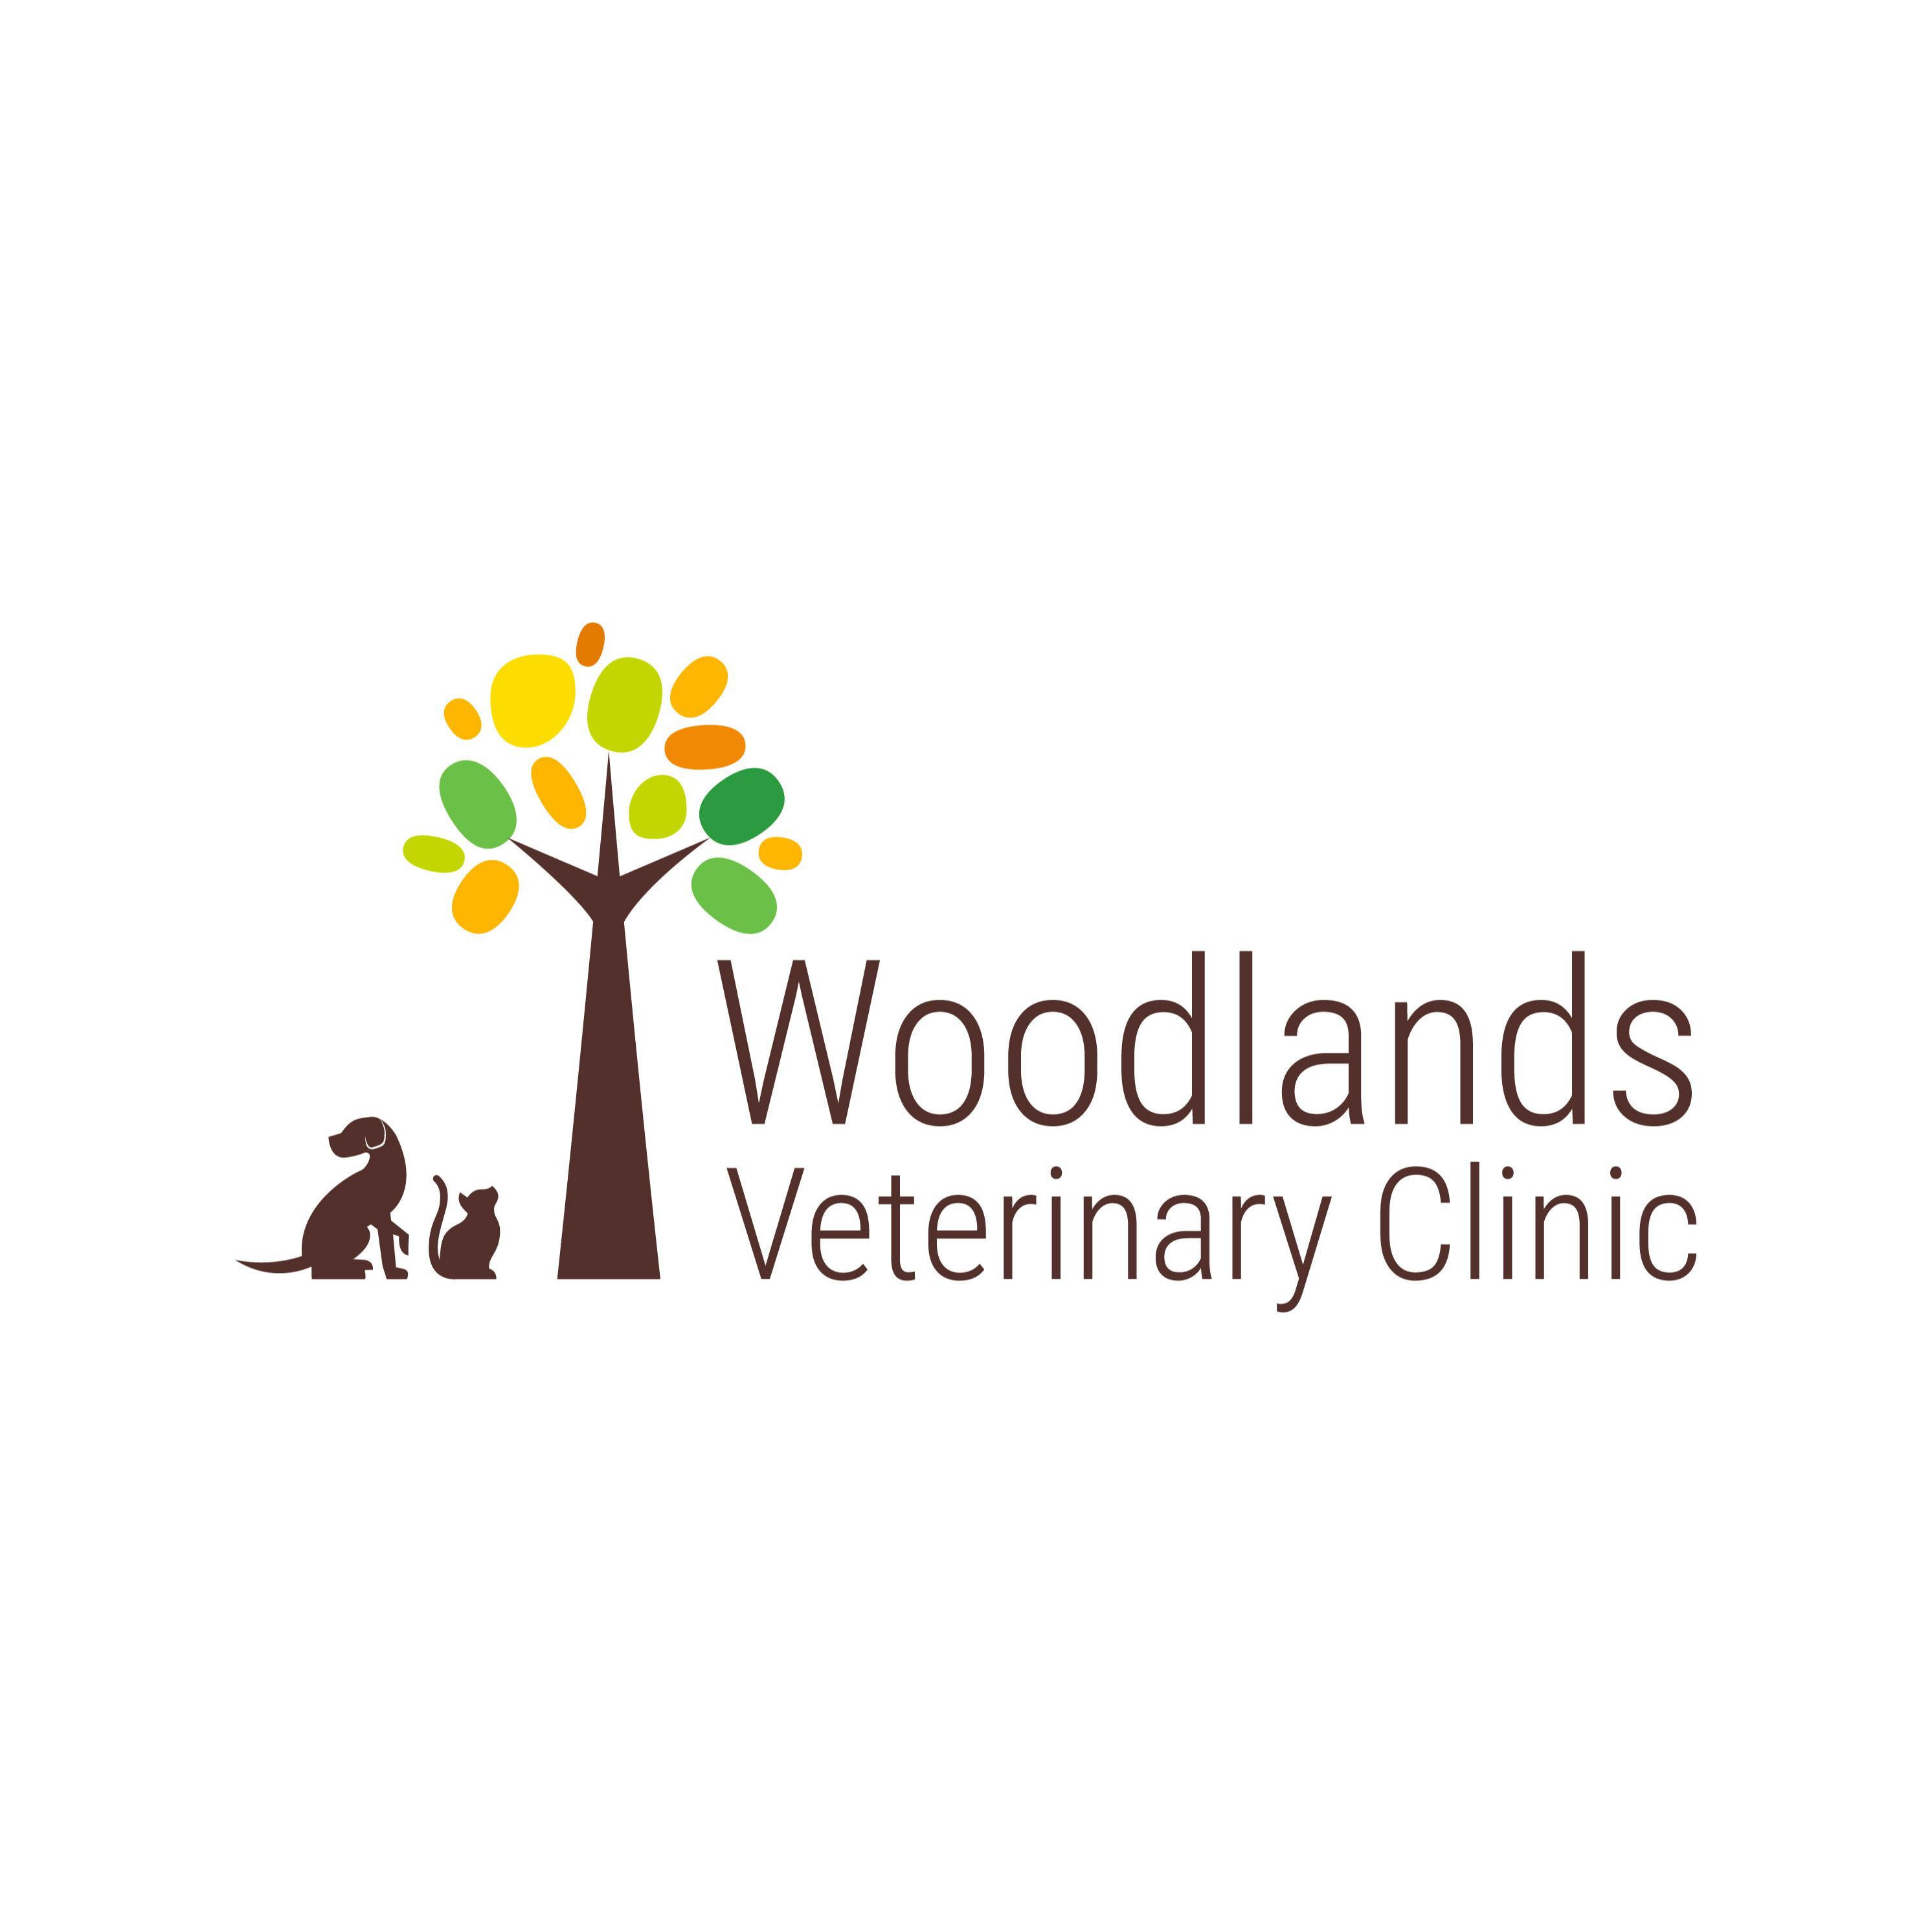 Woodlands Veterinary Clinic - Brockworth - Gloucester, Gloucestershire GL3 4LS - 01242 255133 | ShowMeLocal.com